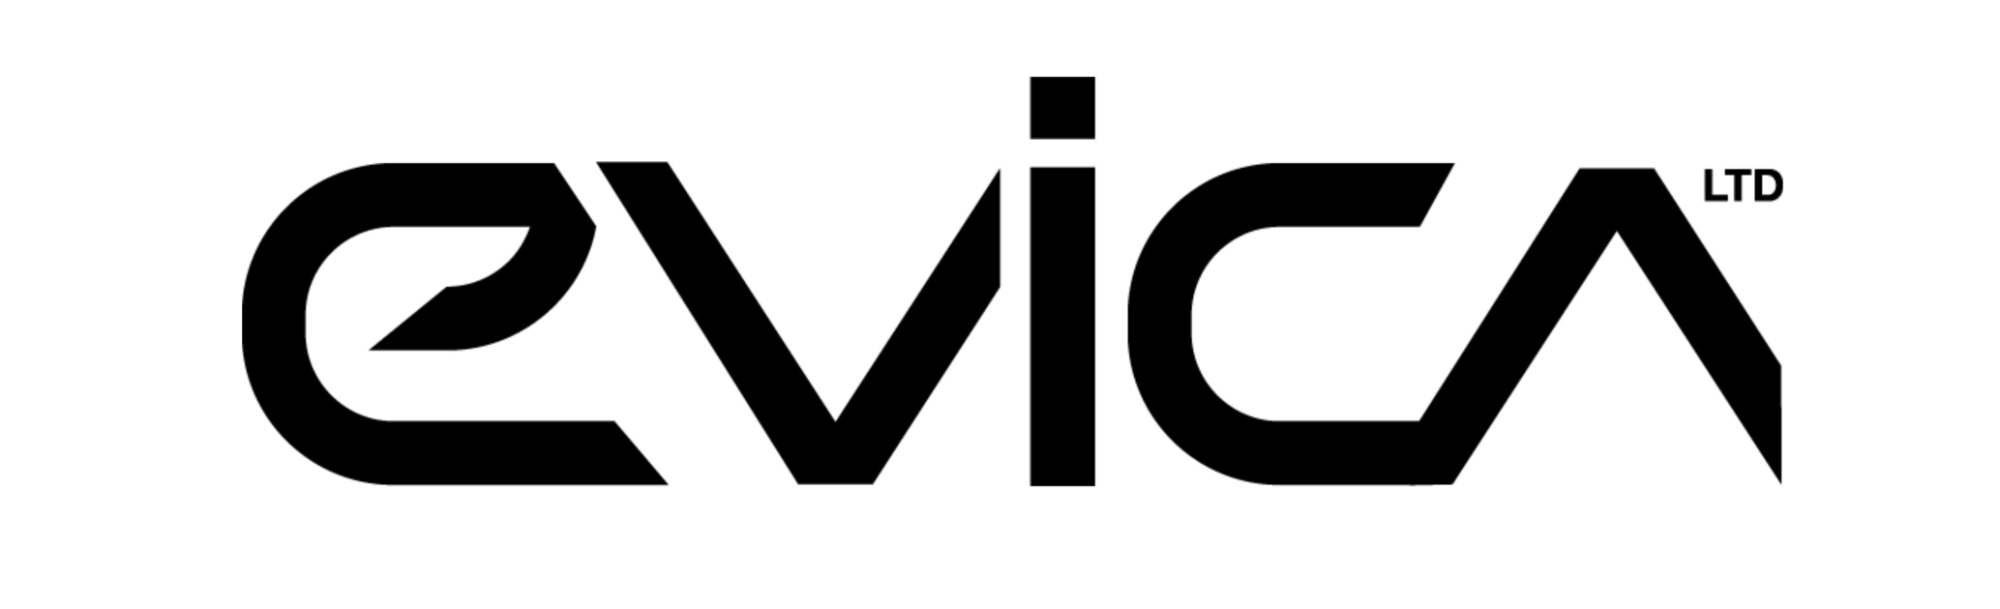 Evicalights Logo